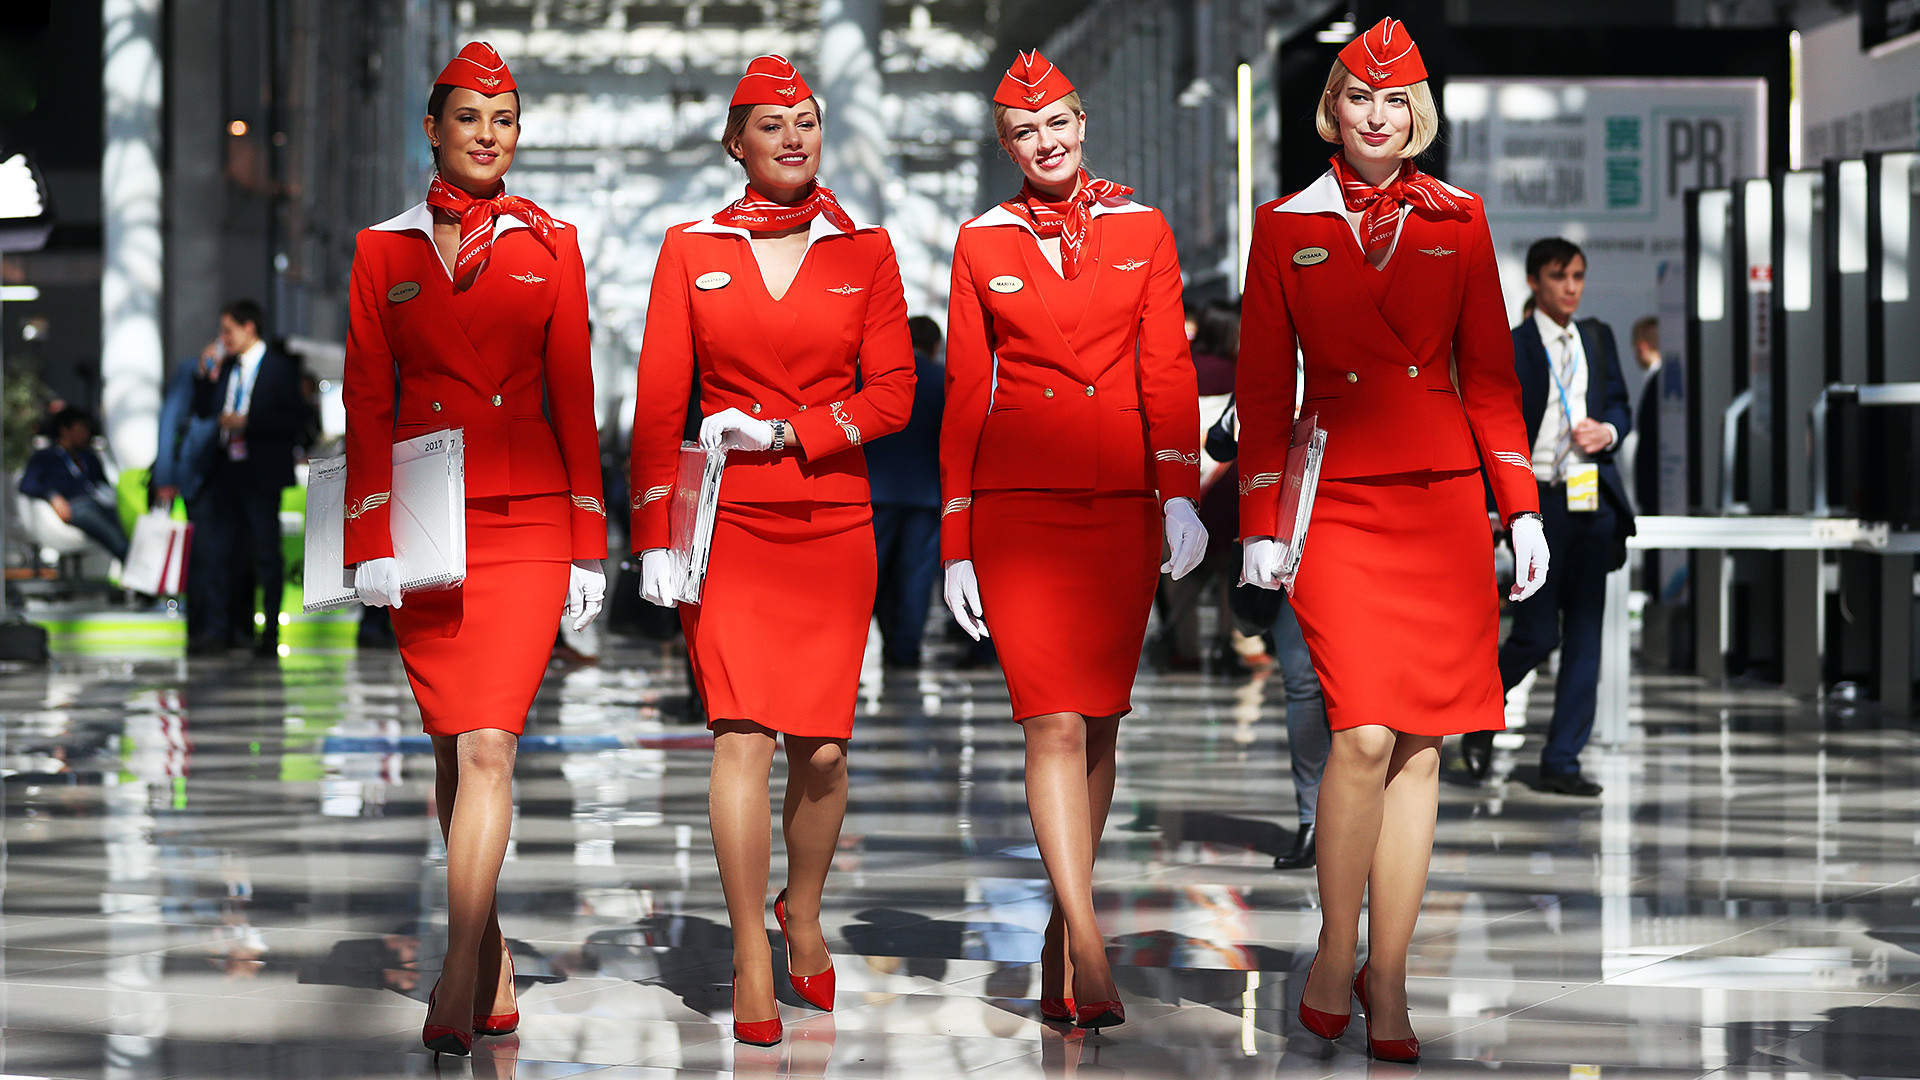 Aeroflot's flight attendants at the 2017 Russian Investment Forum.